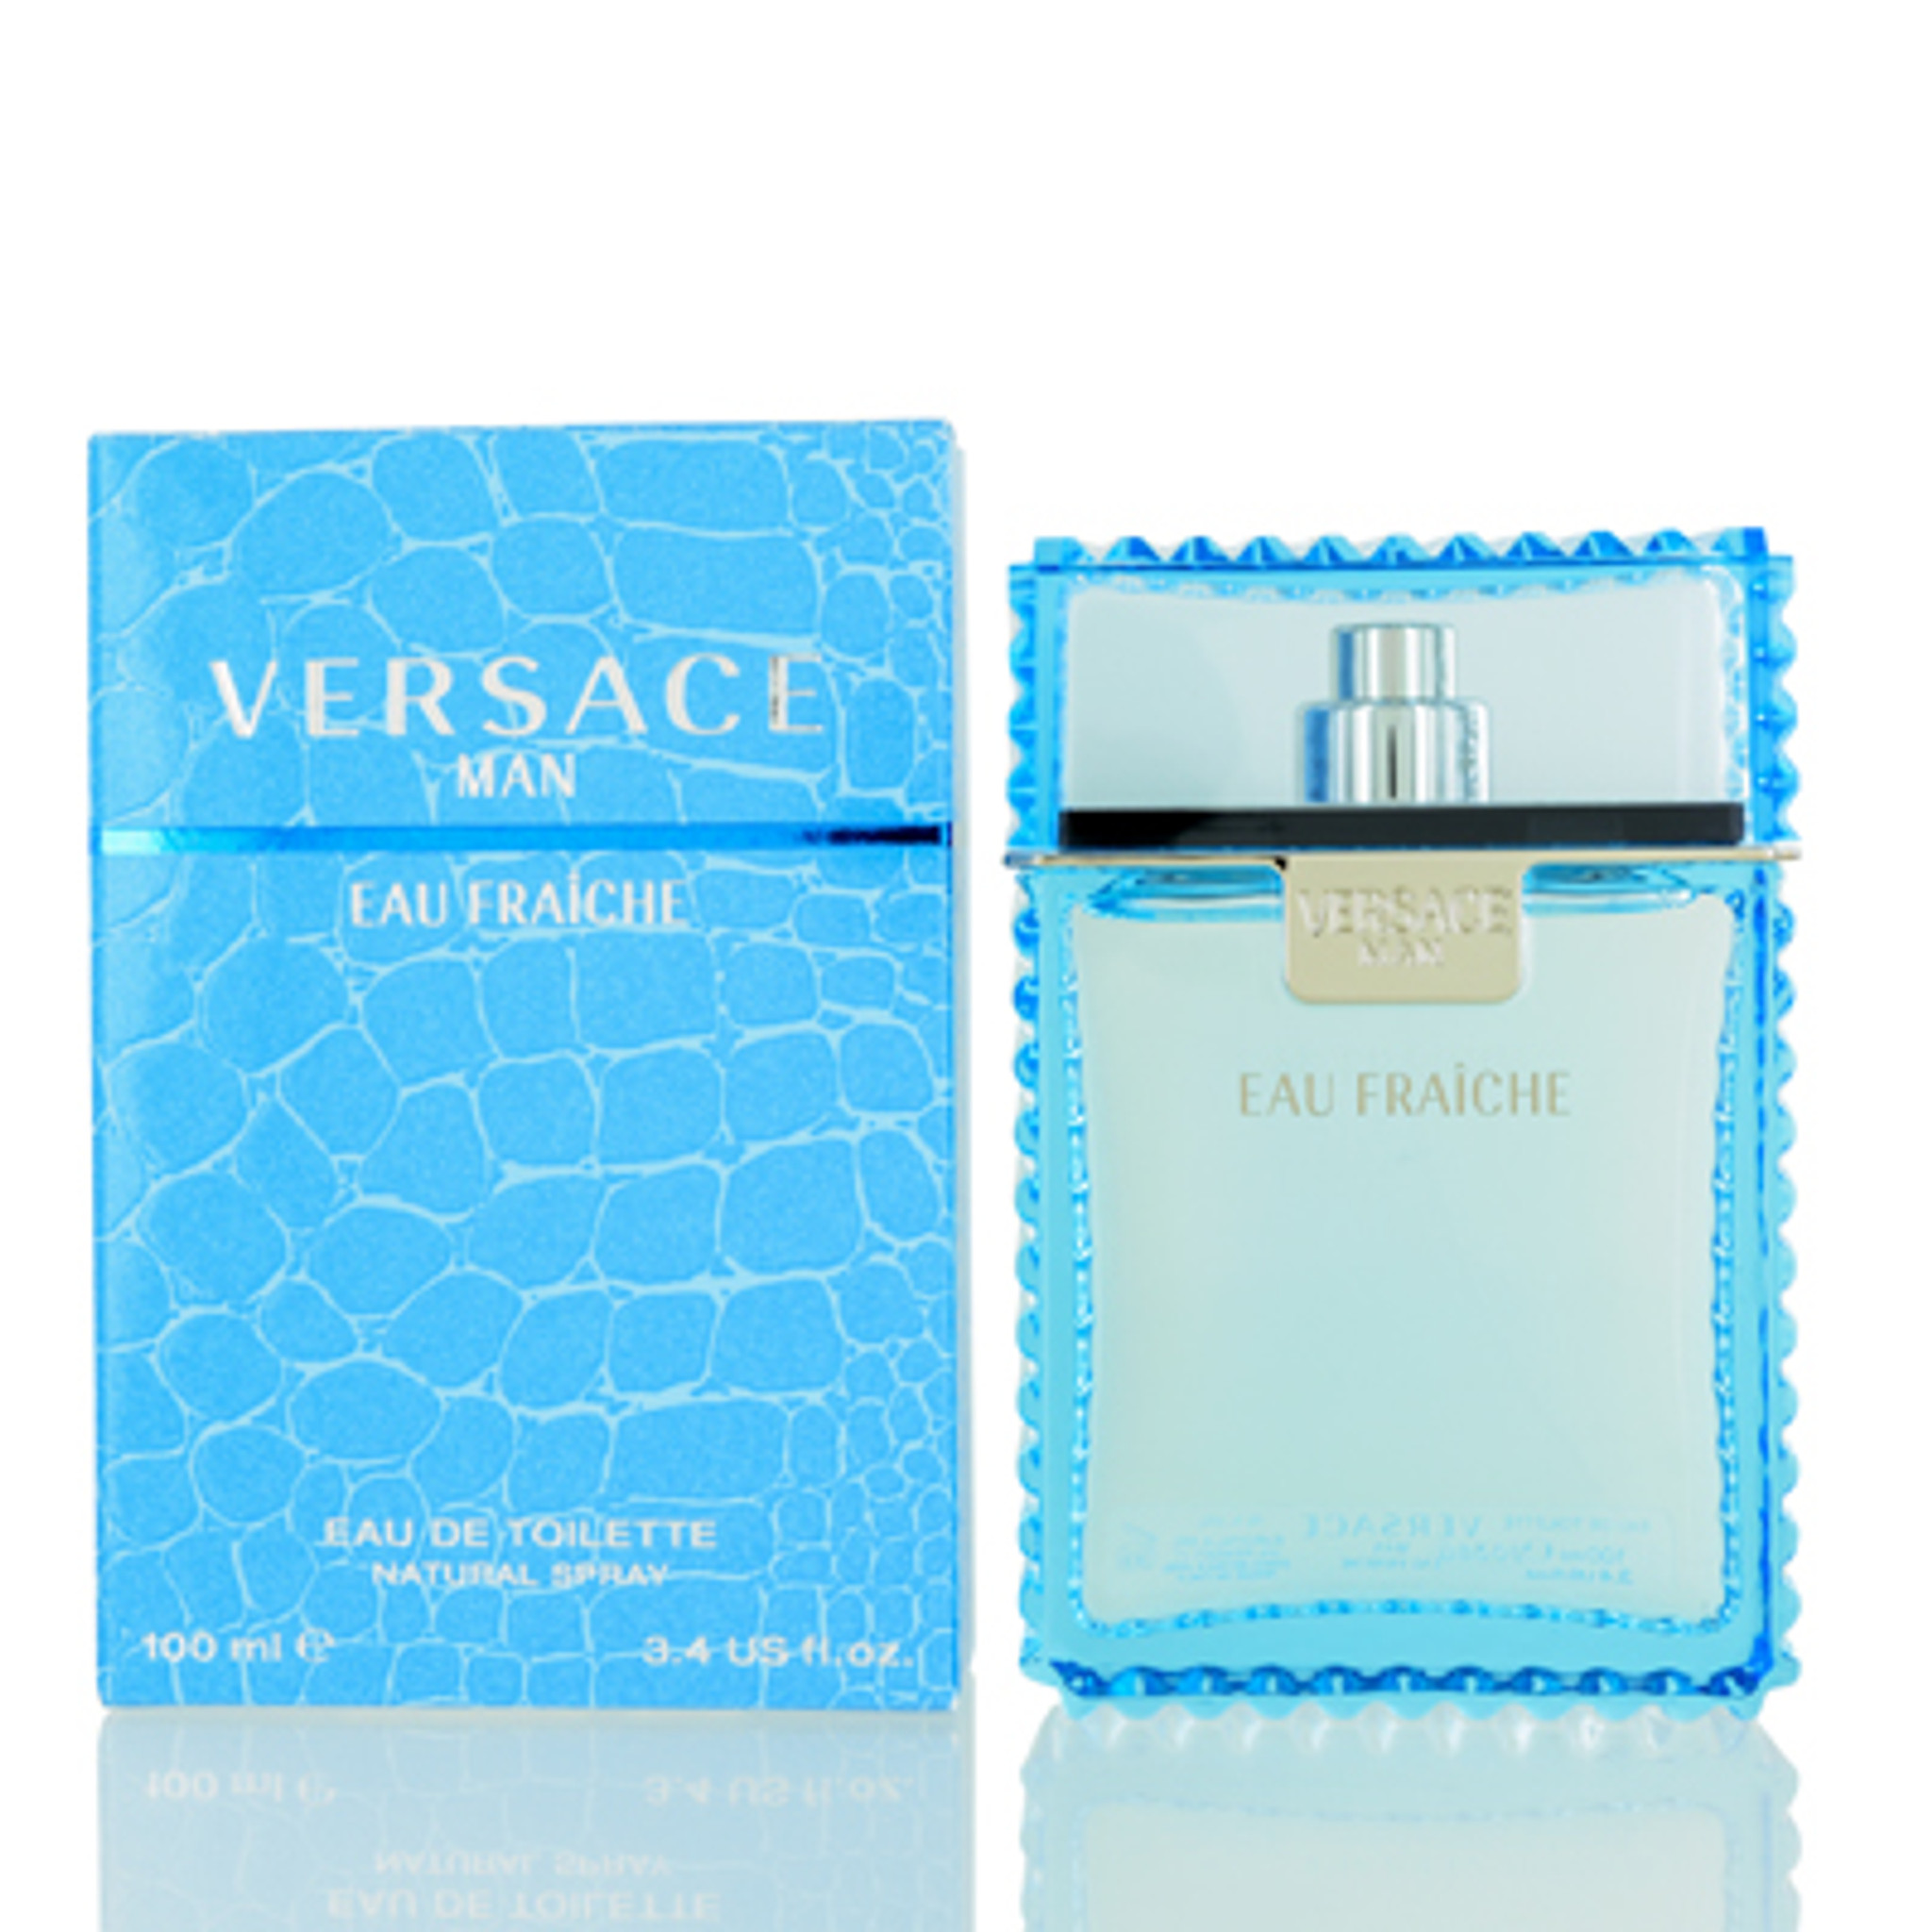 versace blue bottle, OFF 70%,Buy!